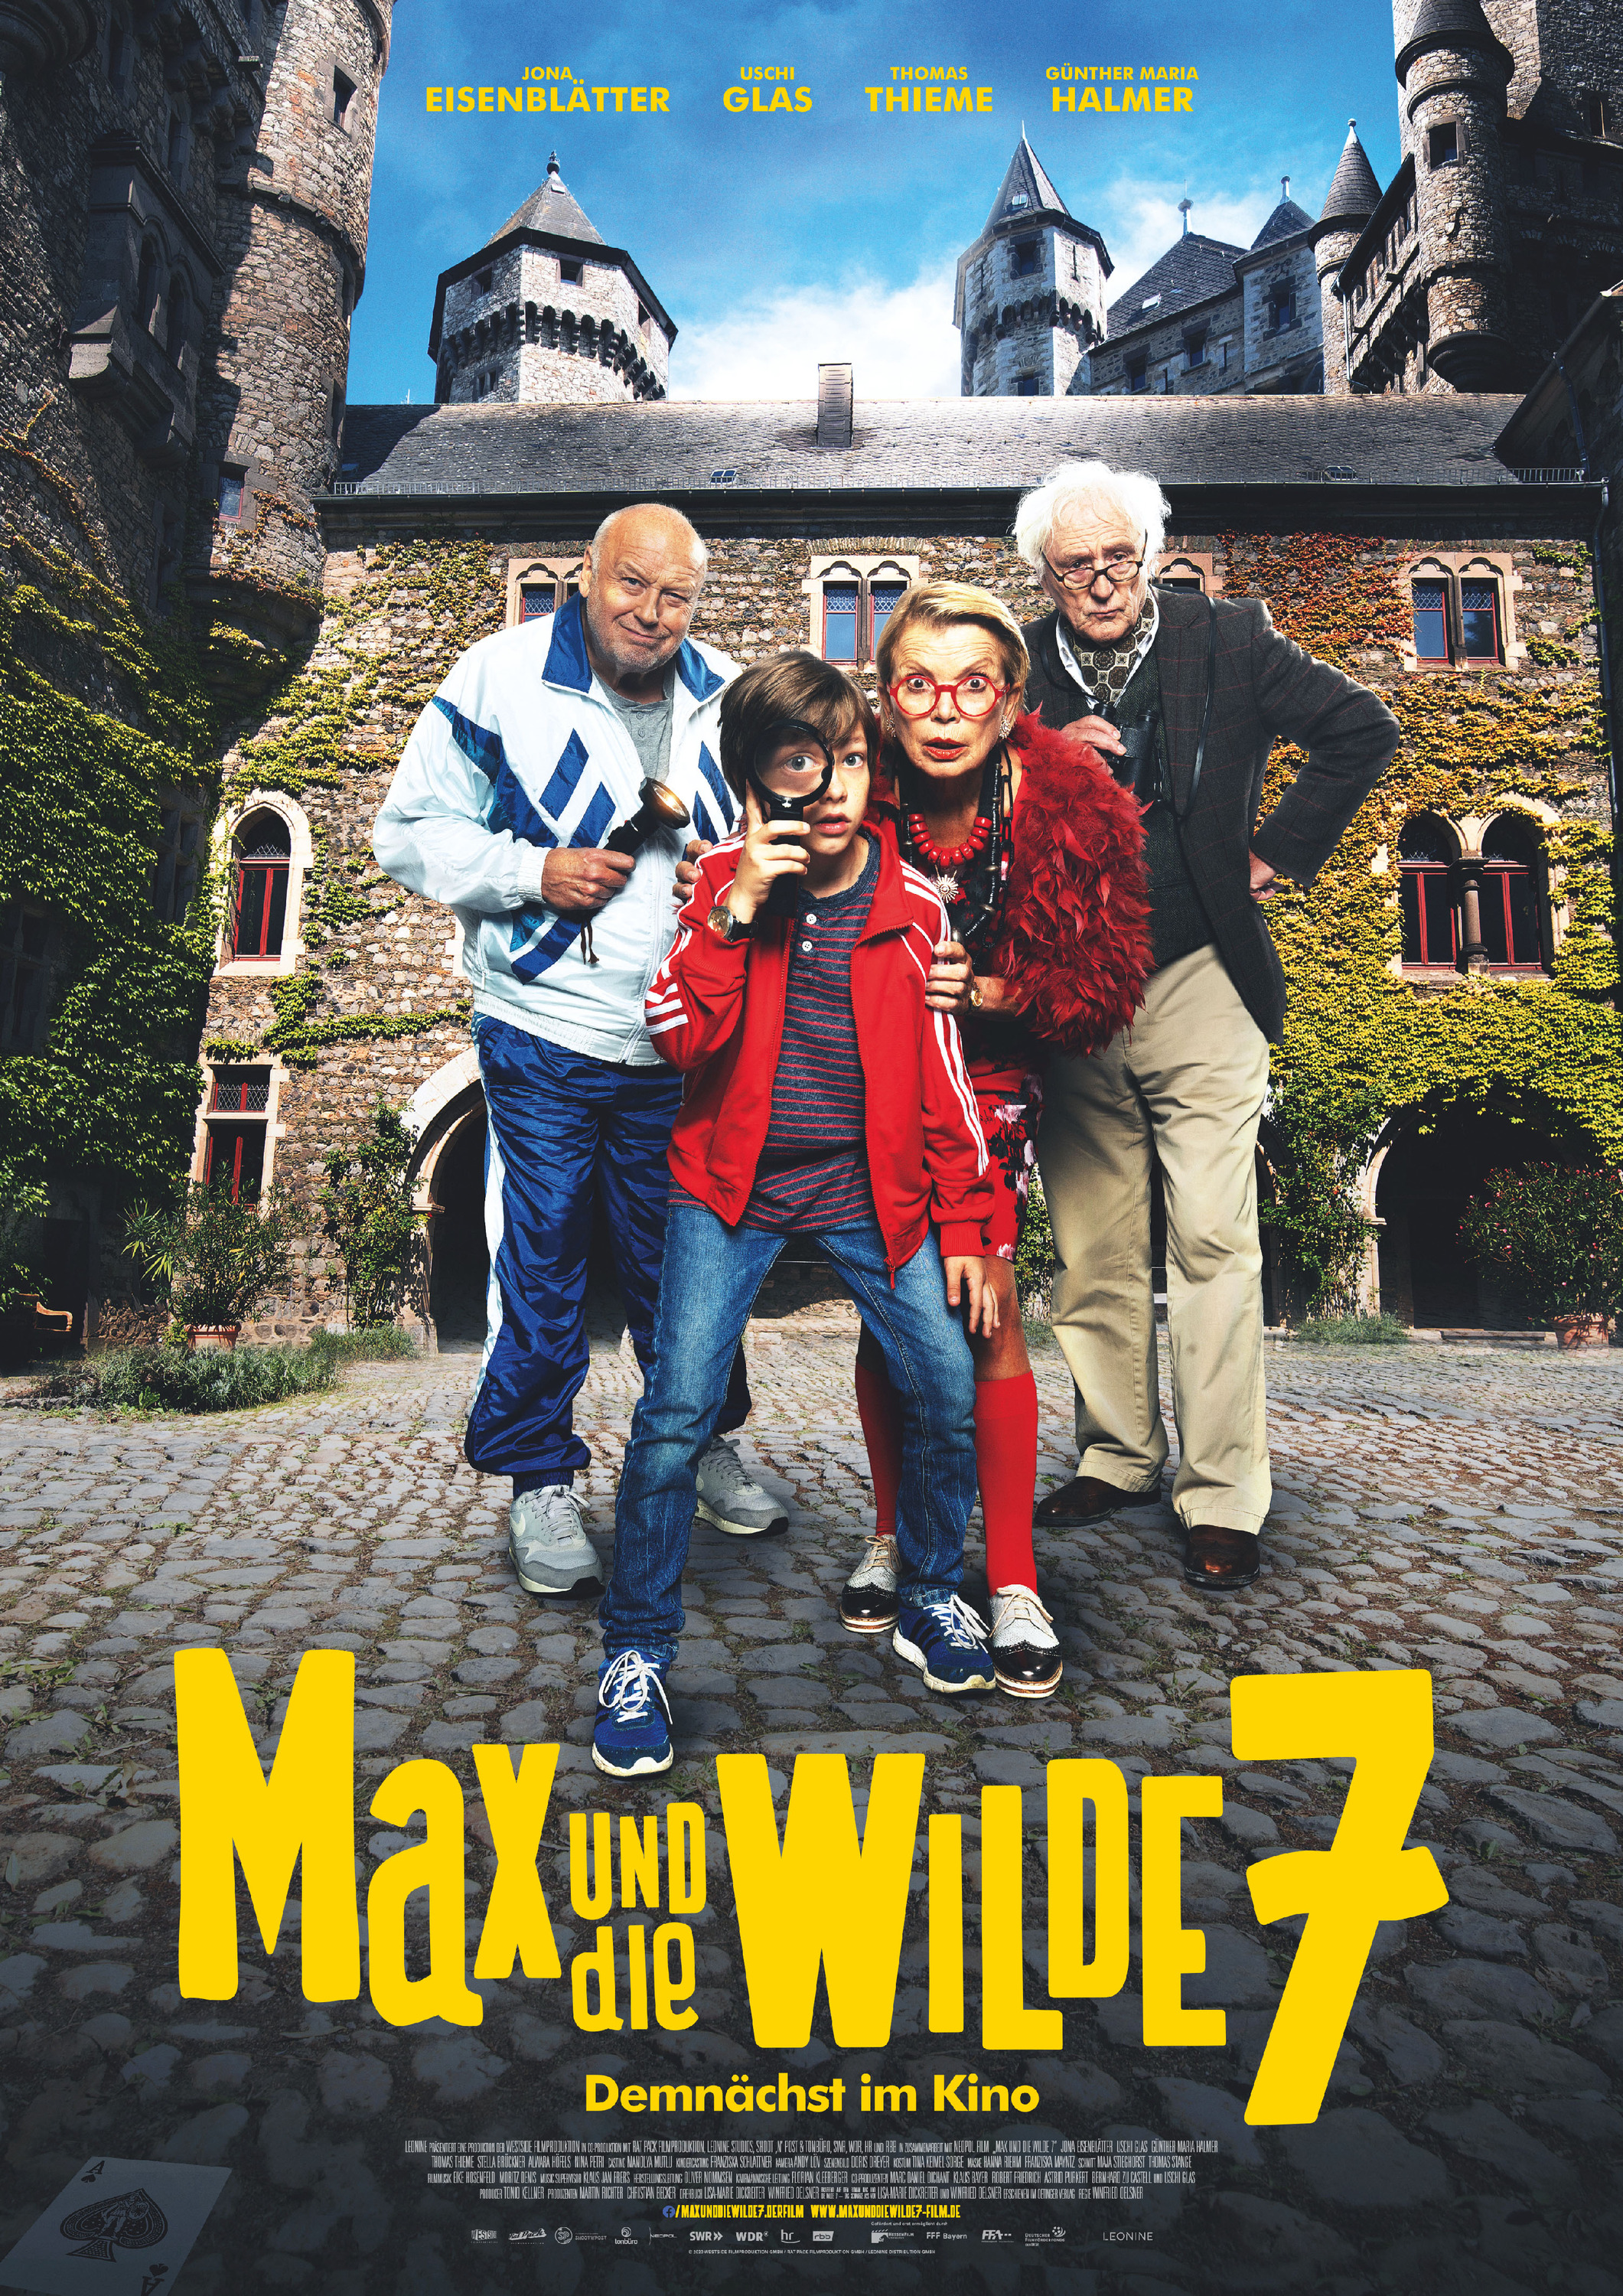 Mega Sized Movie Poster Image for Max und die wilde 7 